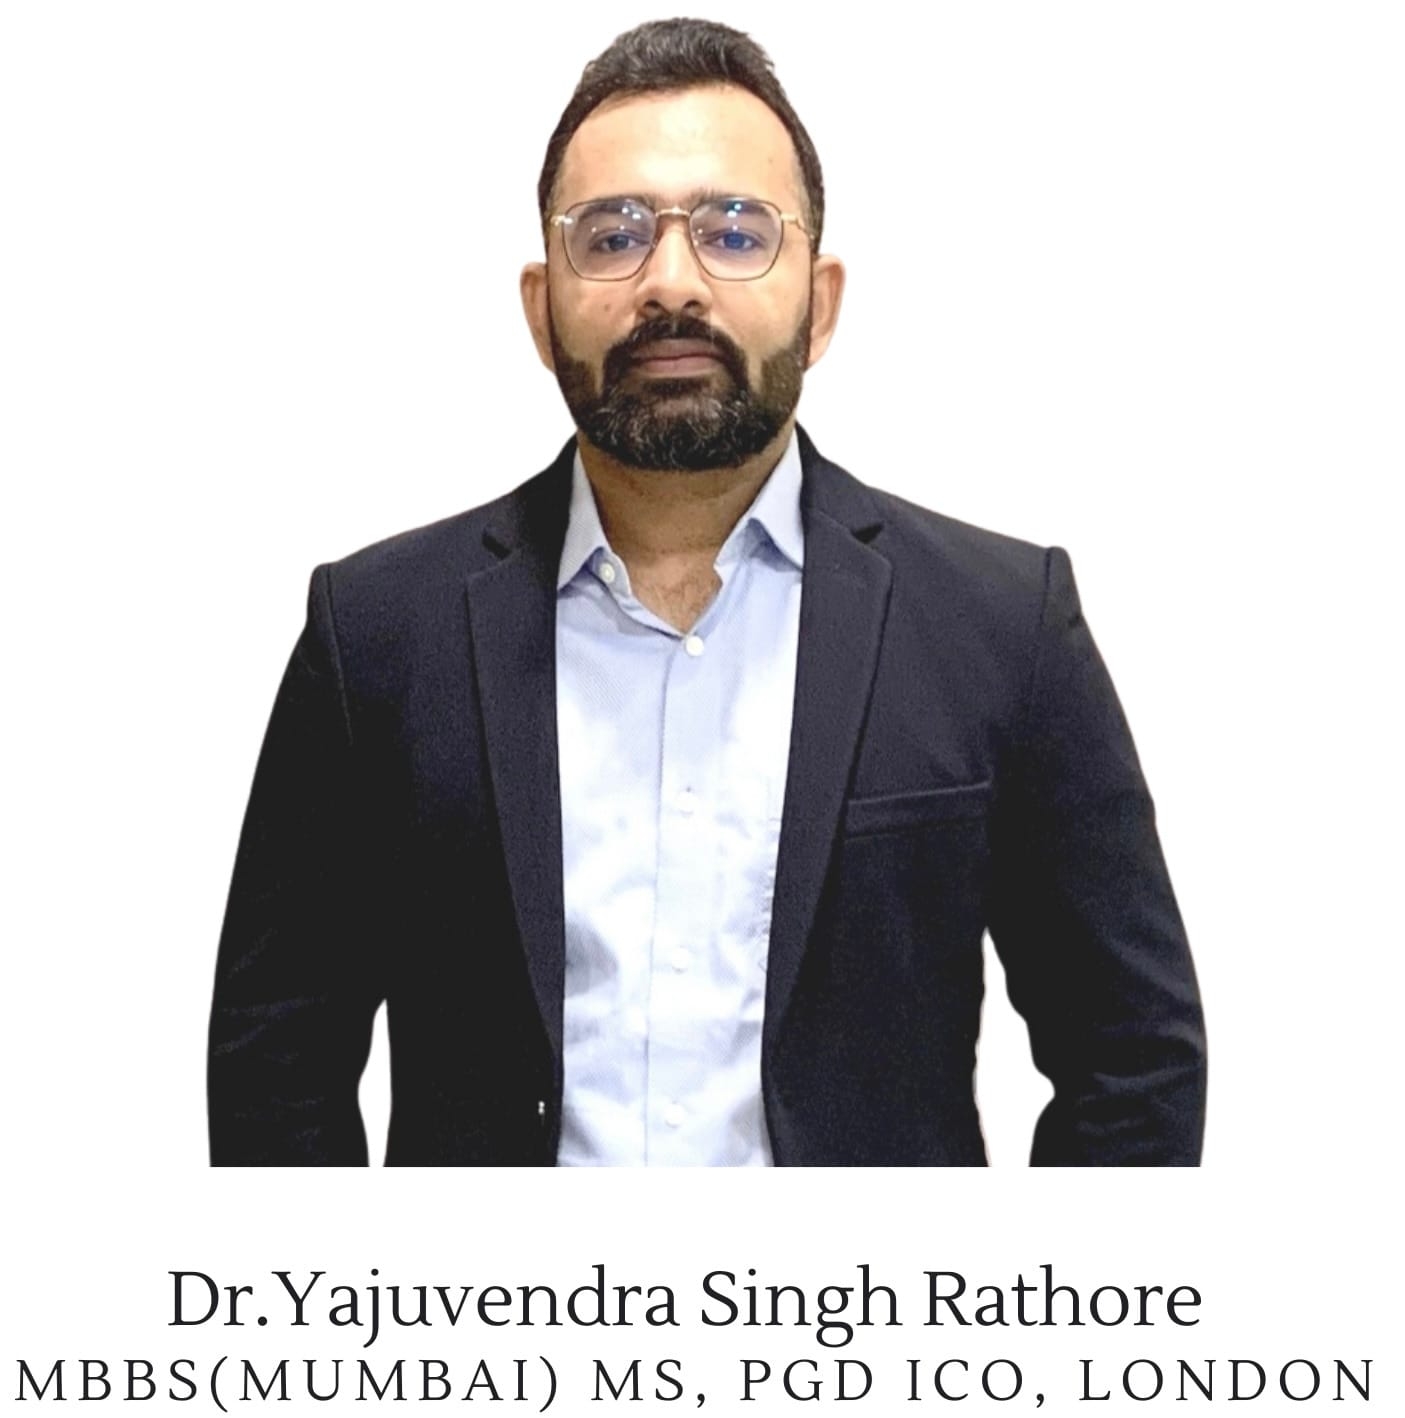 Dr. Yajuvendra Singh Rathore